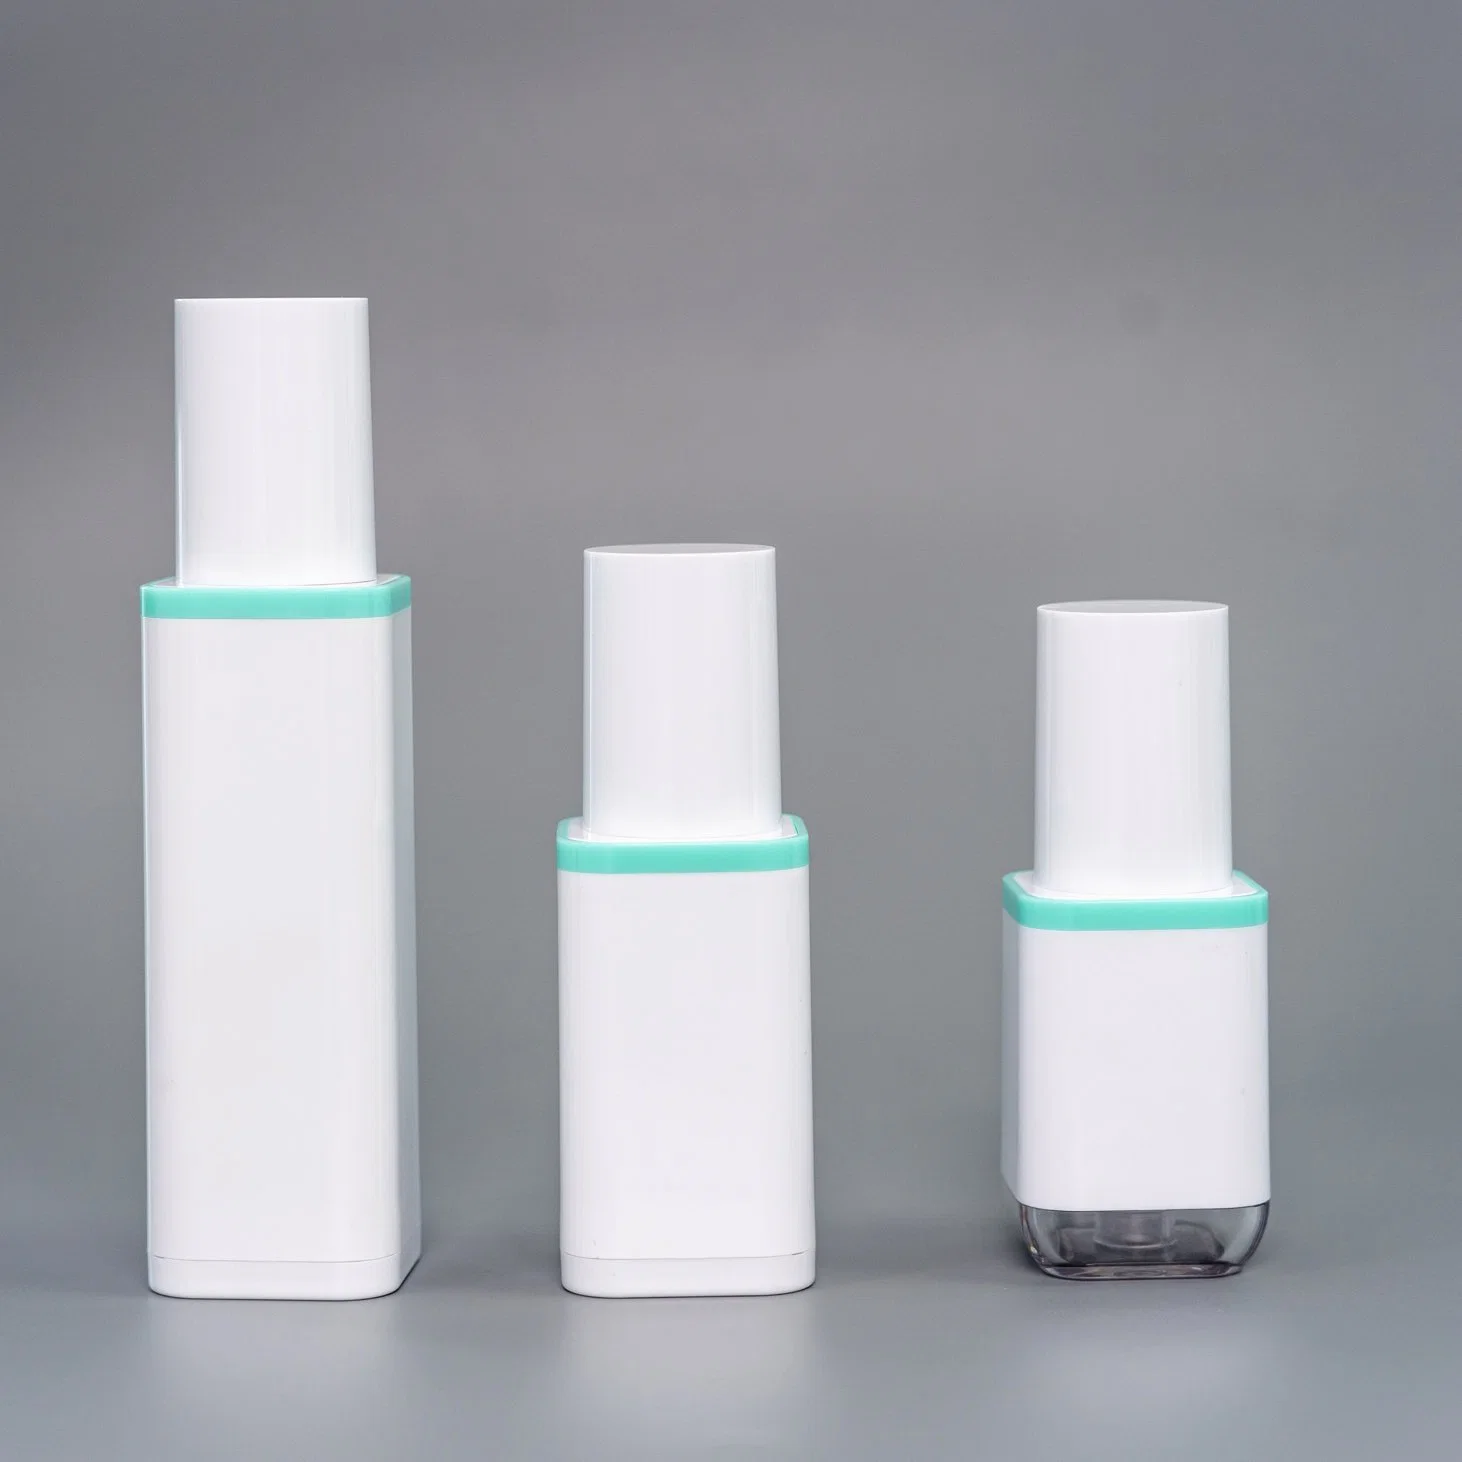 China Plastic Cosmetic Airless Pump Bottles 15ml Eye Cream Rectangle Shape Container 30ml Cream Bottles Vacuum Pump Dispenser for Makeup Brand